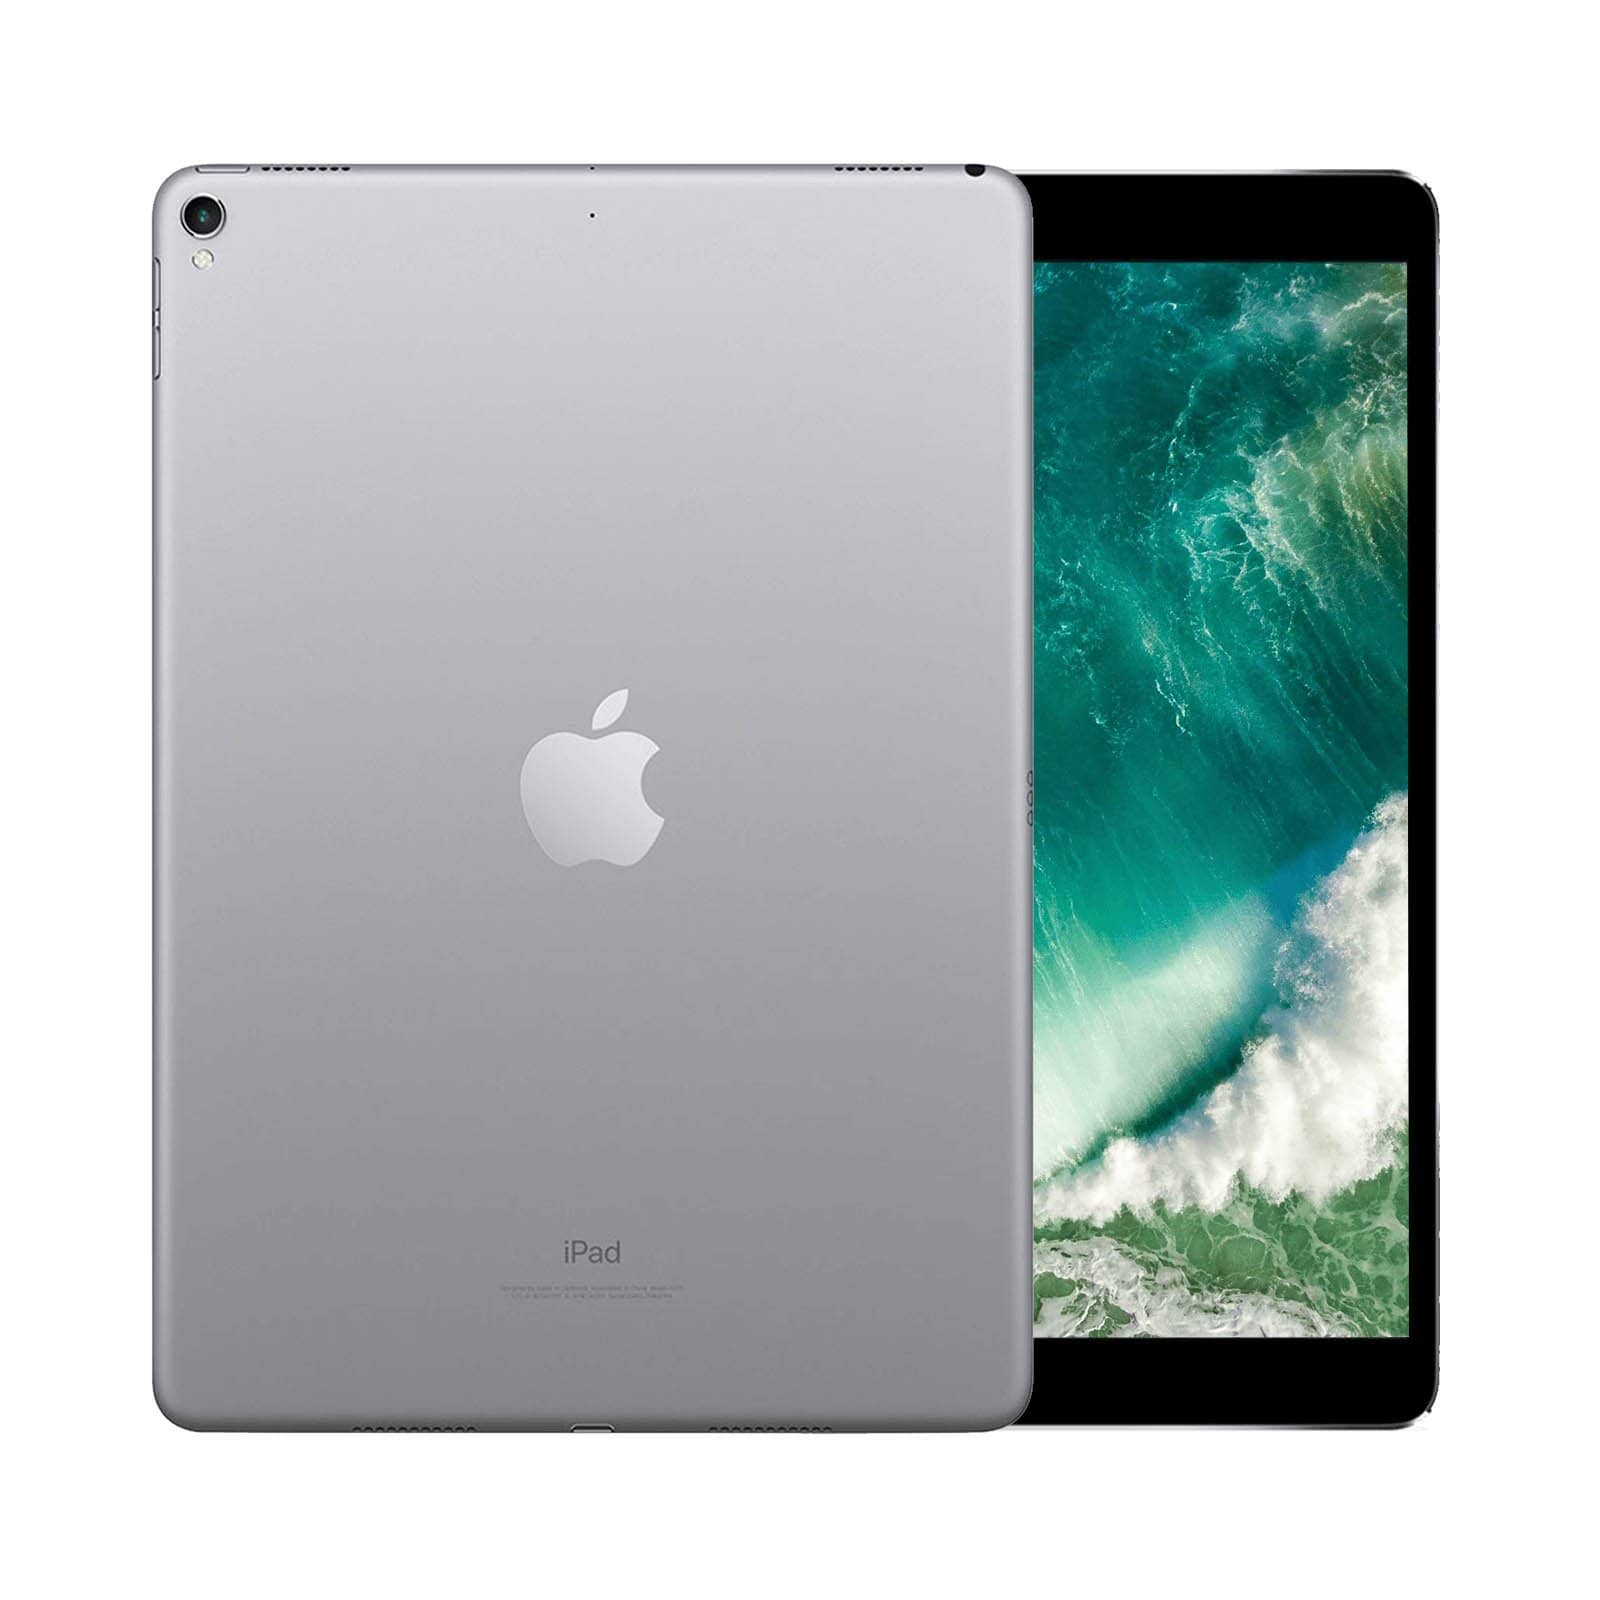 iPad Pro 10.5 Inch 64GB Space Grey Good - WiFi 64GB Space Grey Good